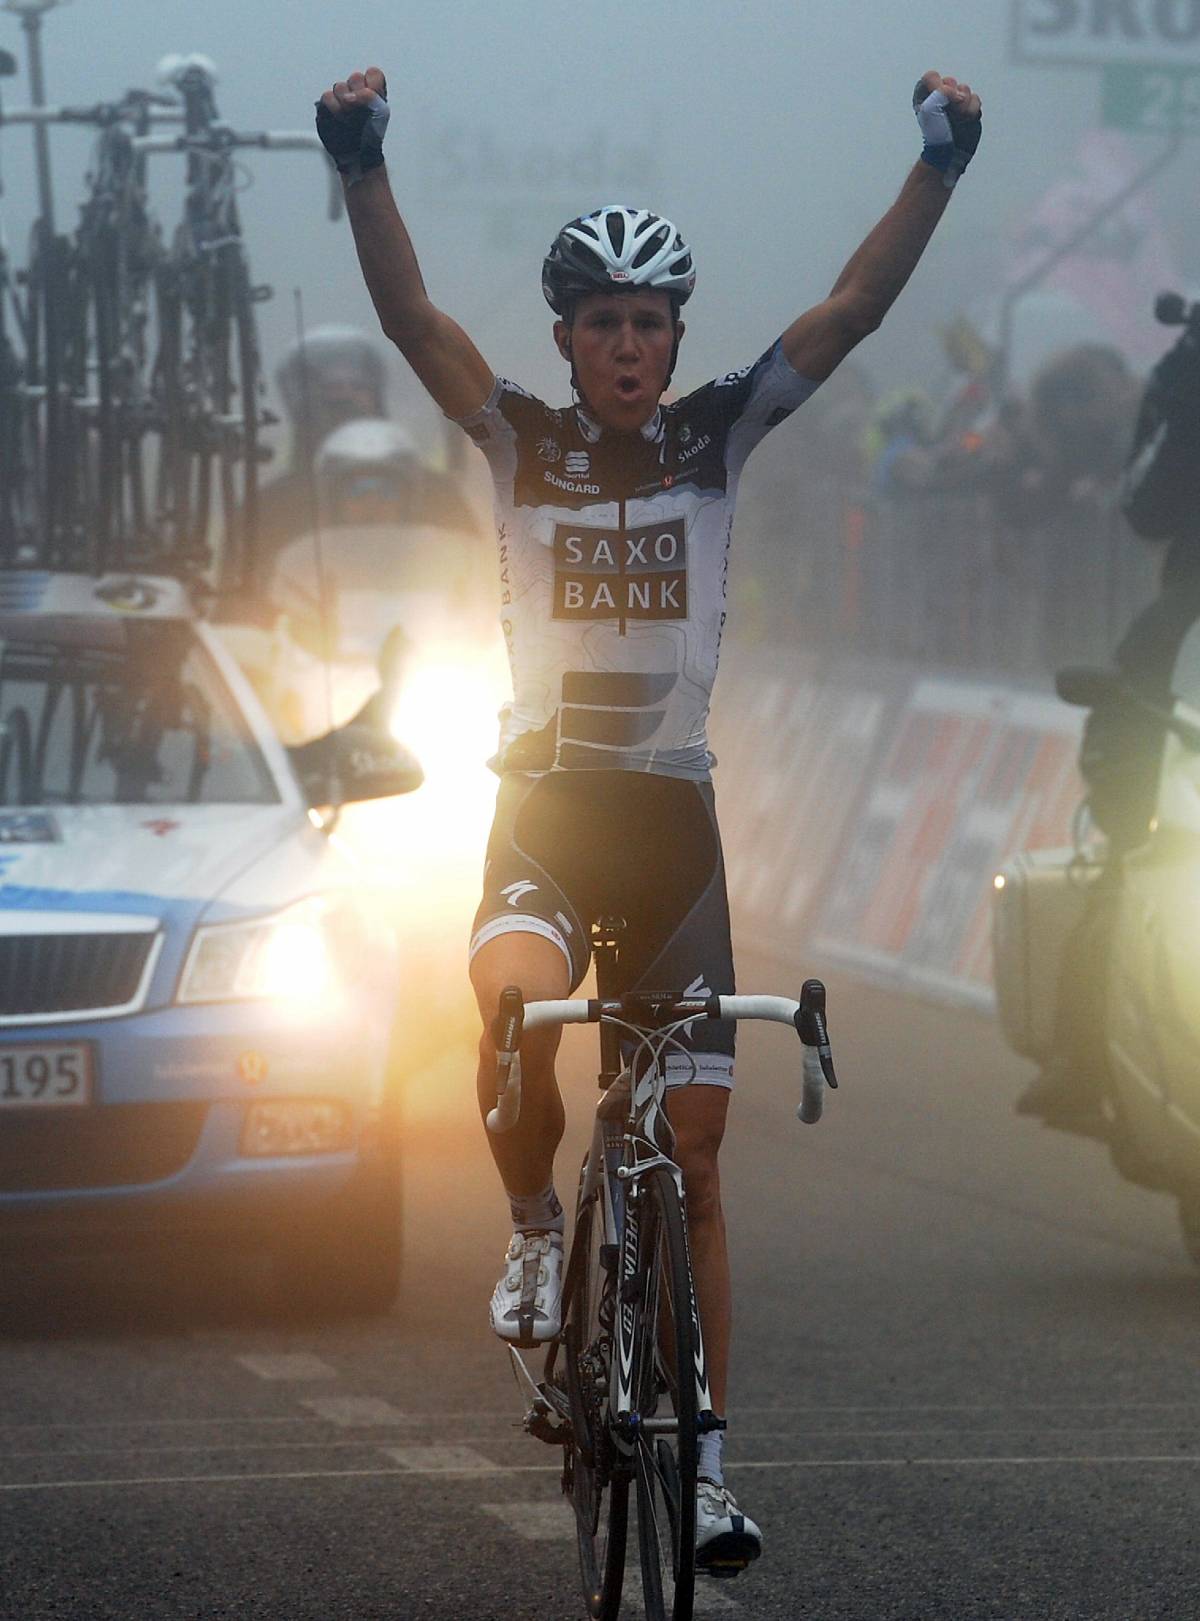 Giro, Italia non vince più  
Vinokourov sempre rosa